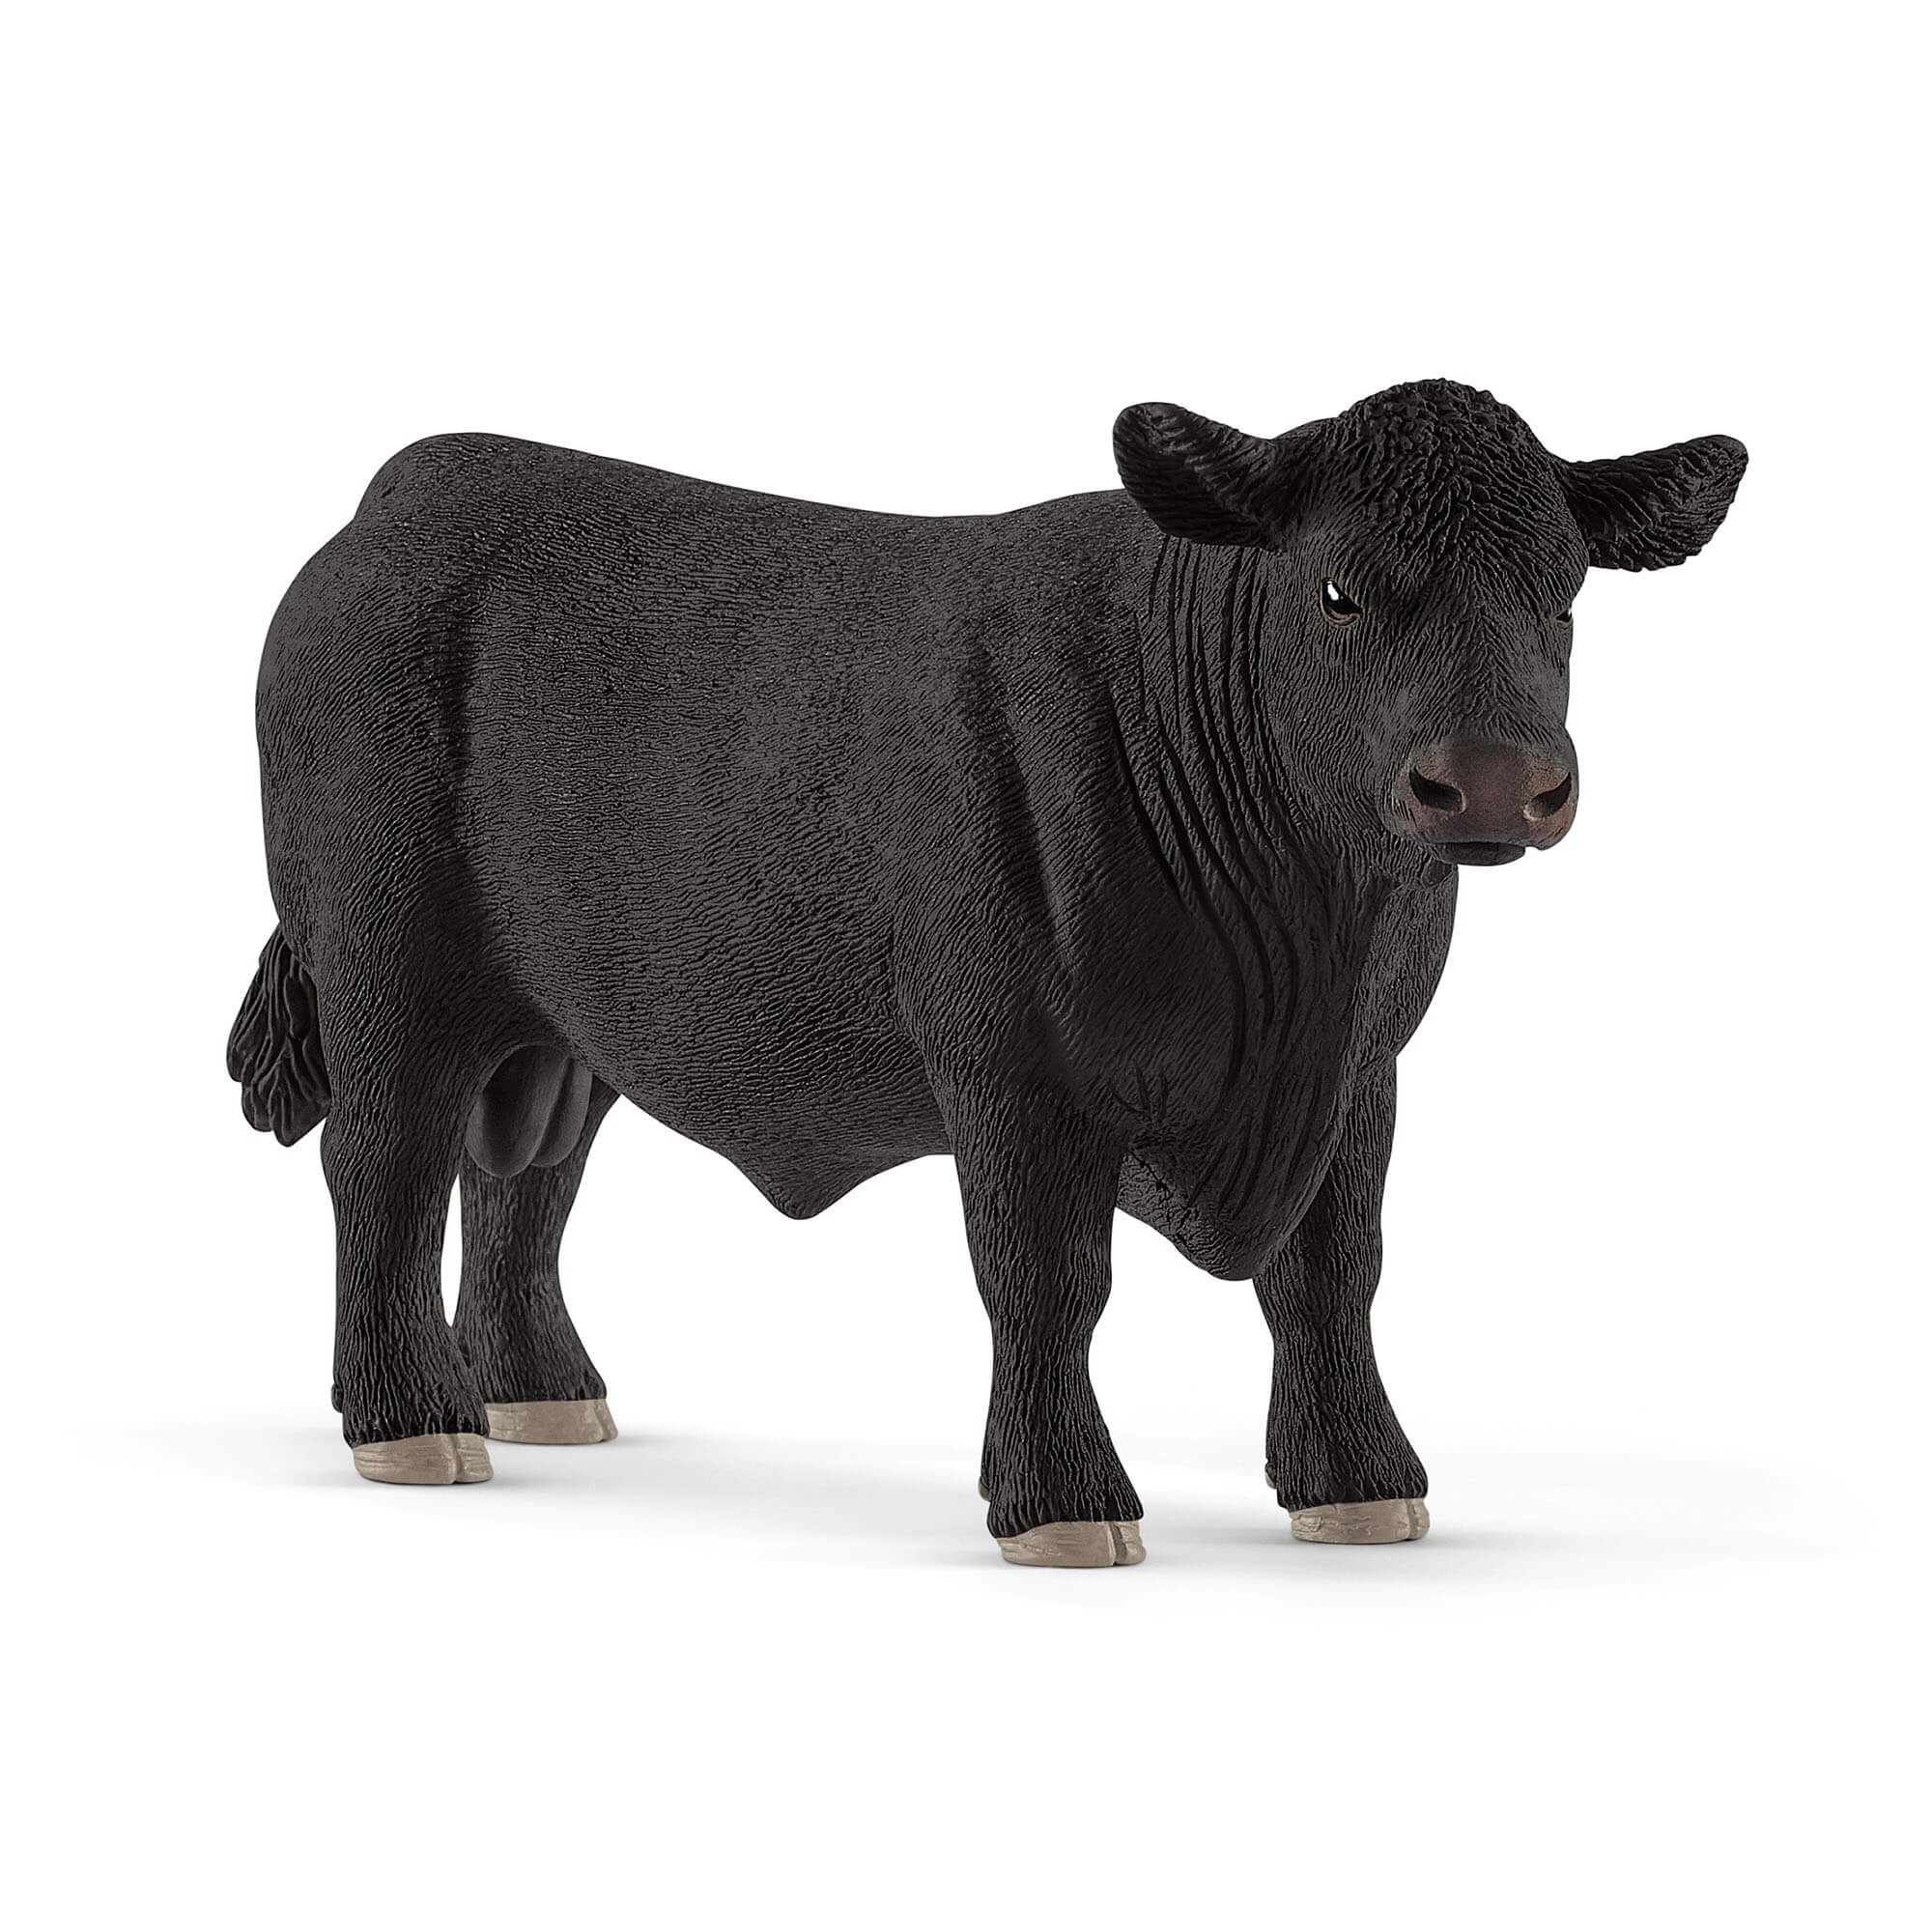 Schleich Farm World Black Angus Bull Animal Figure